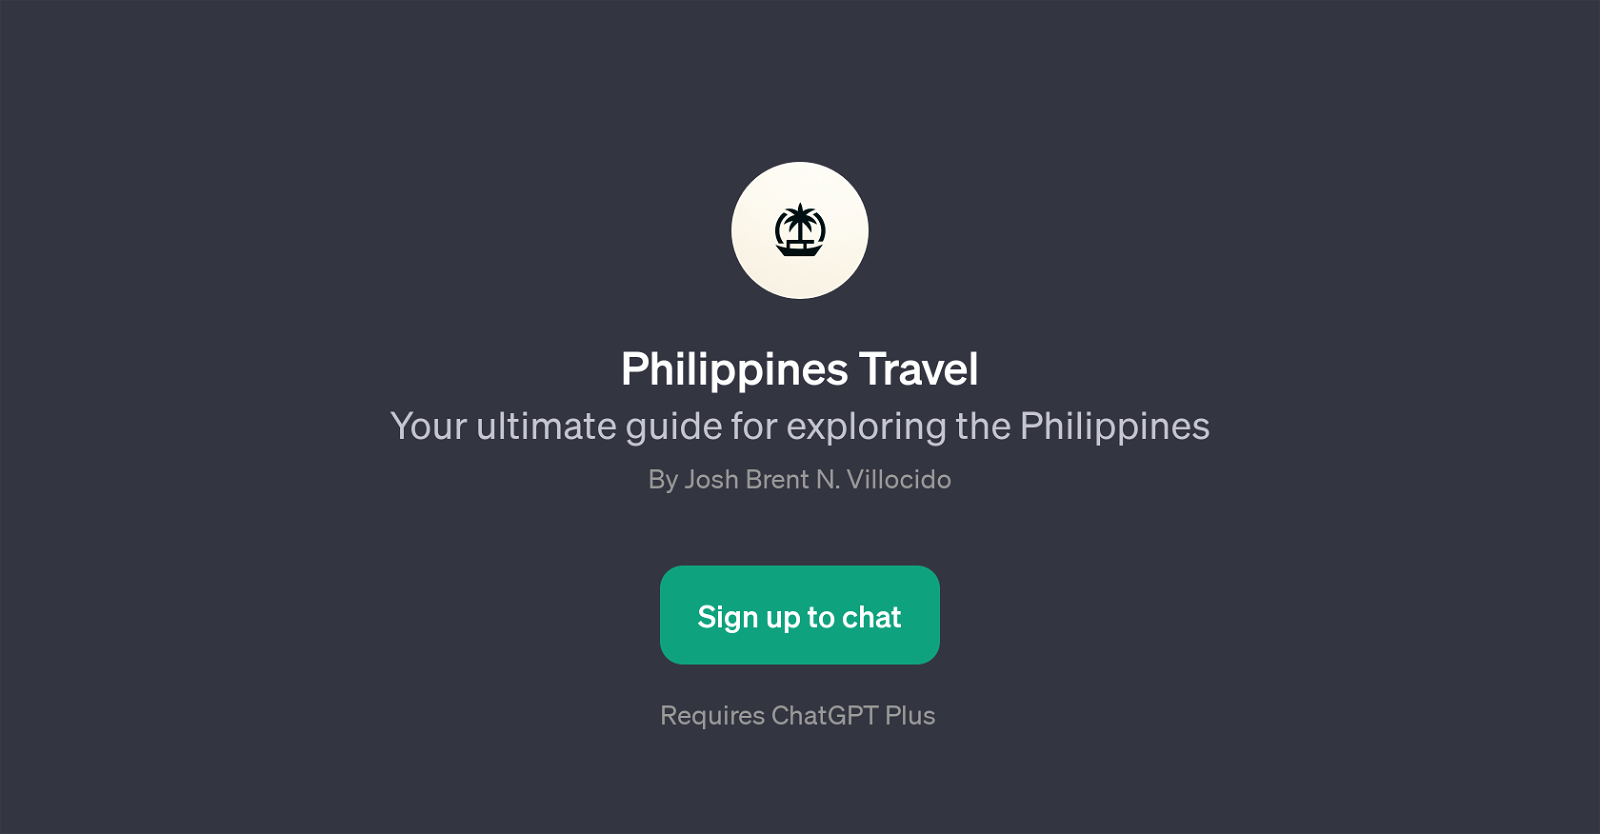 Philippines Travel website